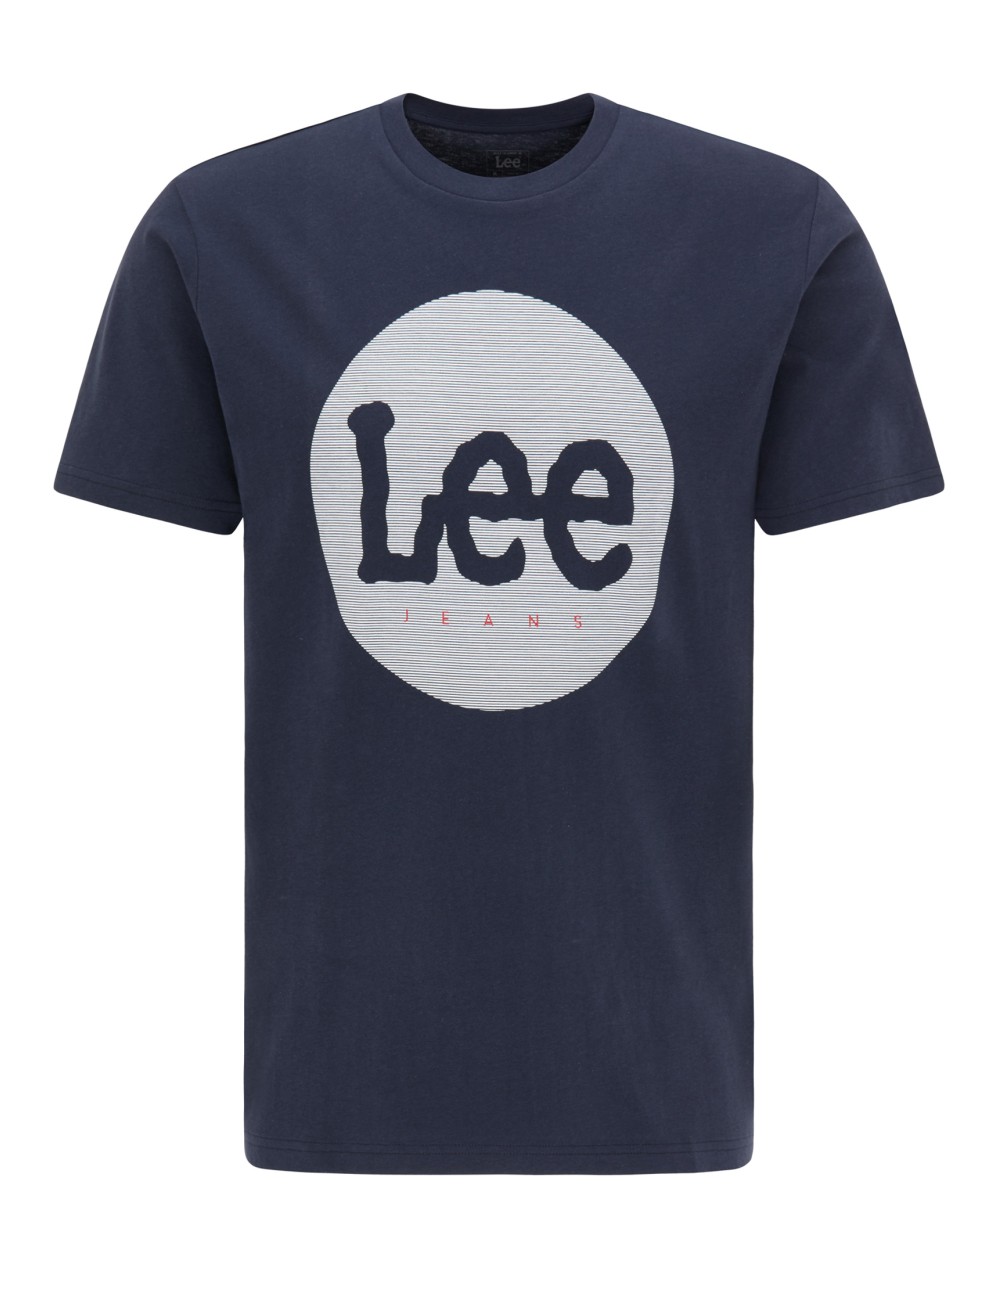 Men's T -Shirt Circle Tee Blue Navy